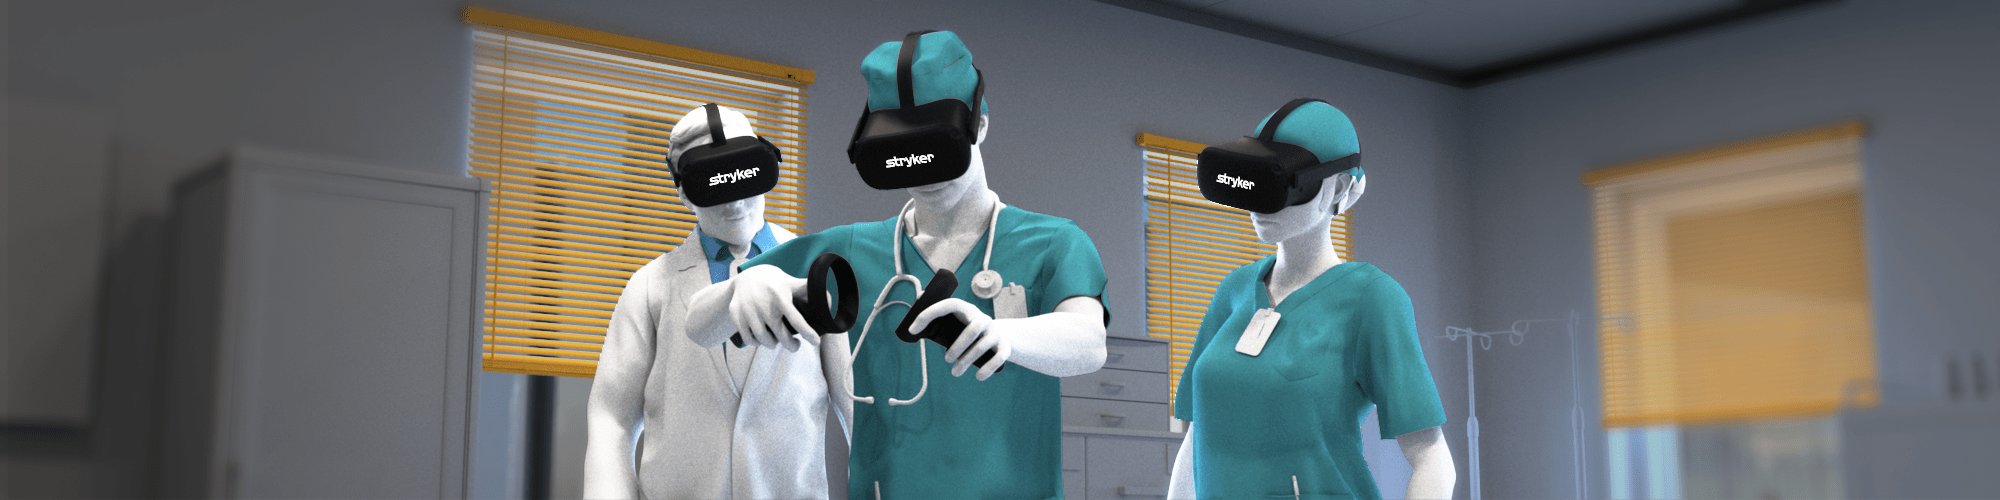 New Medical VR Development Software